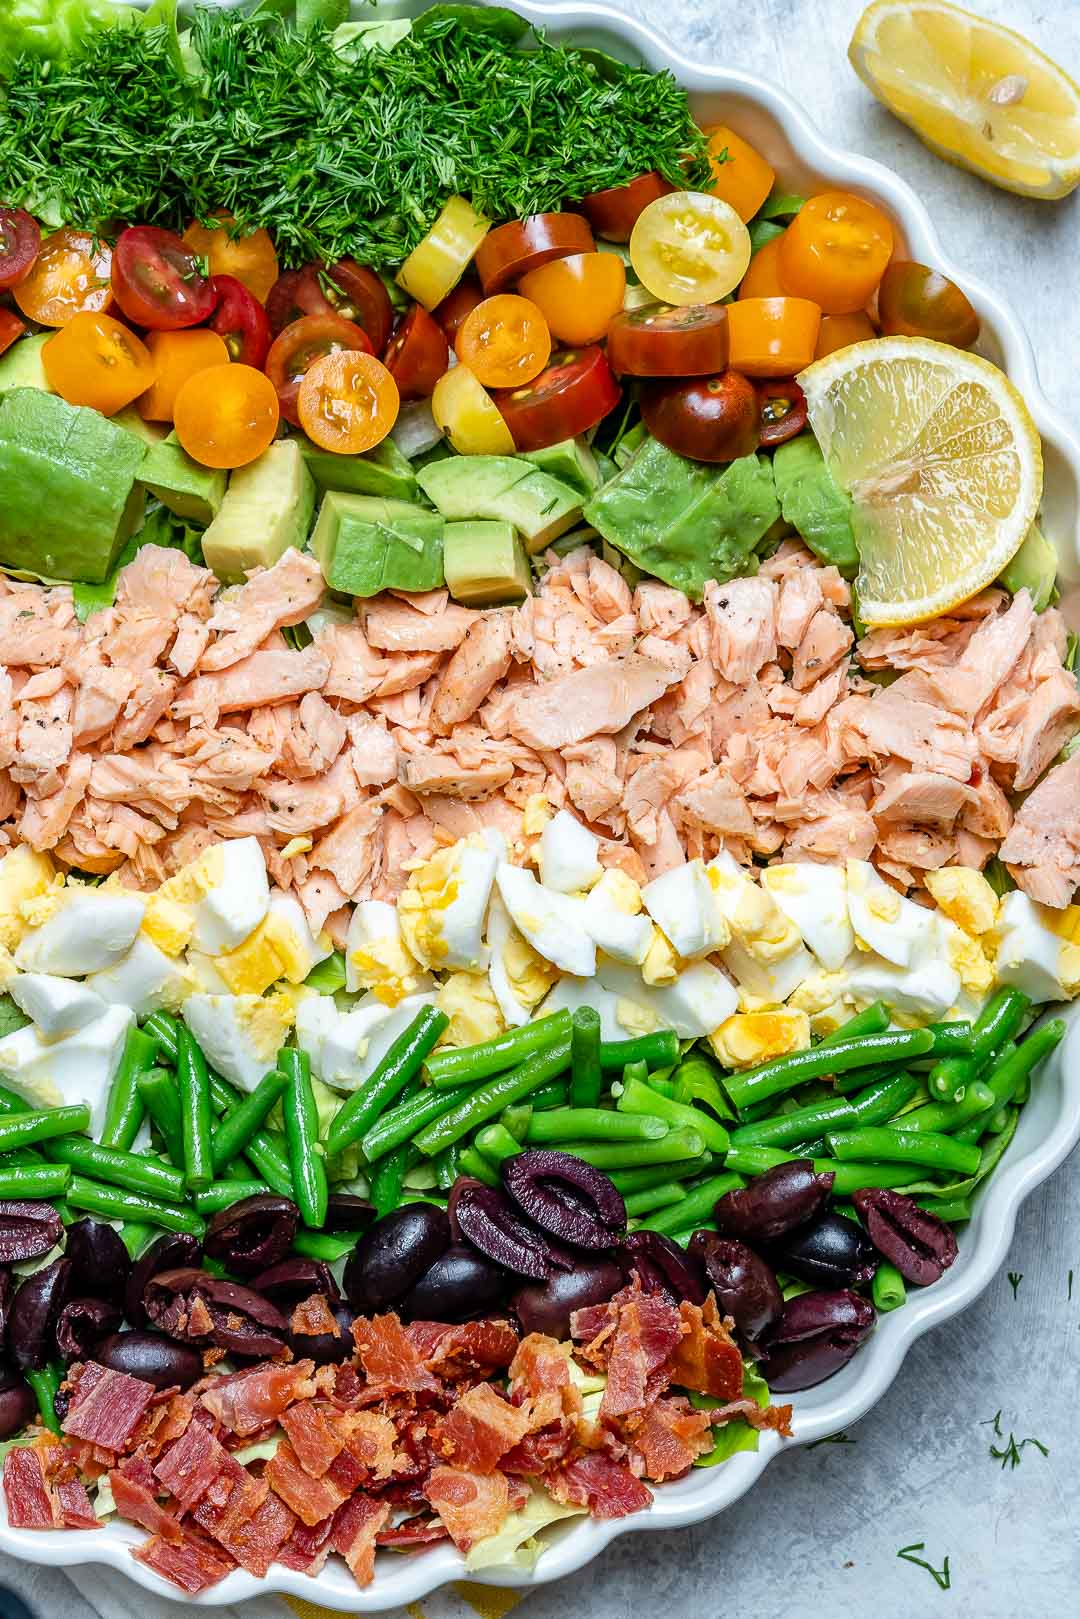 https://cleanfoodcrush.com/wp-content/uploads/2019/10/Beautiful-Salmon-Cobb-Salad.jpg